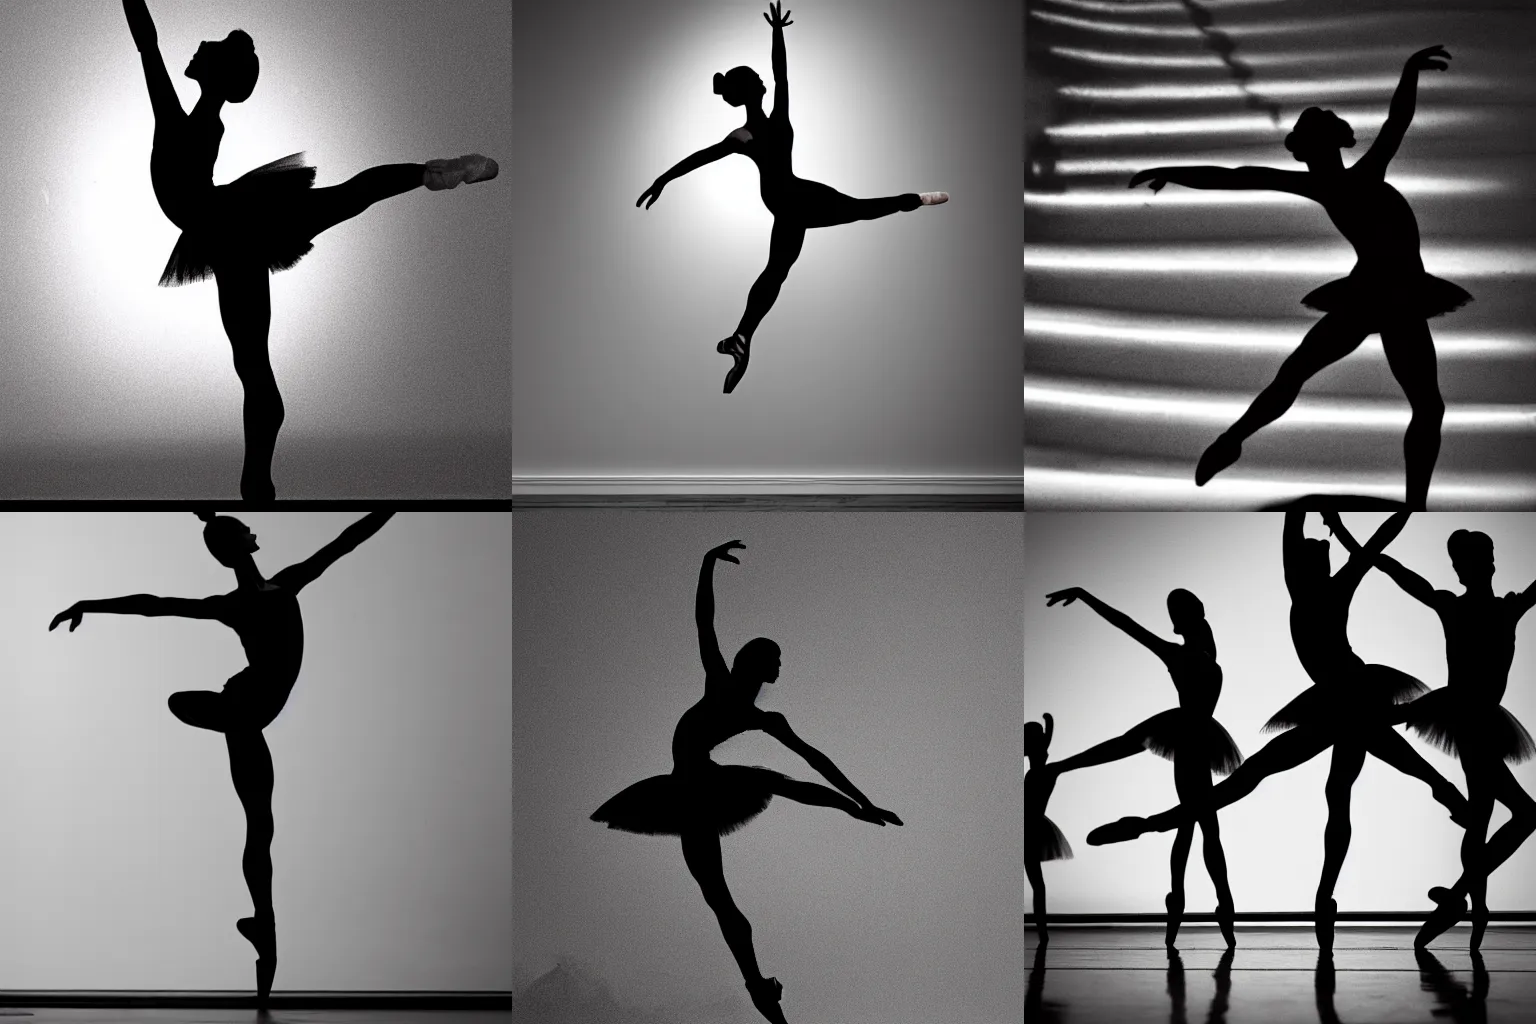 Prompt: ballet dancer silhouette shadow